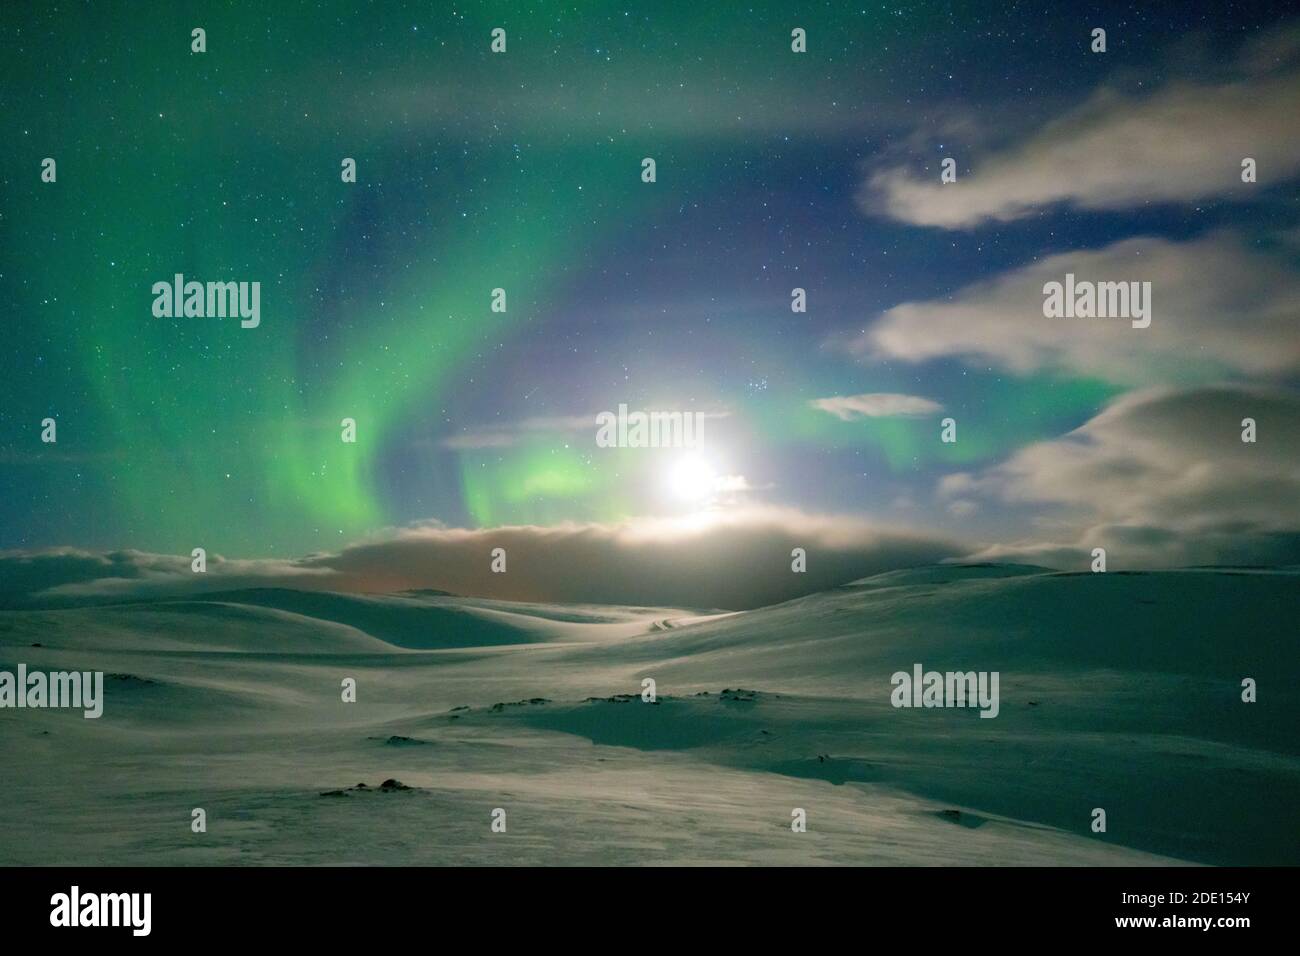 Snowy landscape lit by moon in the starry sky during the Northern Lights (Aurora Borealis), Skarsvag, Nordkapp, Troms og Finnmark, Norway Stock Photo